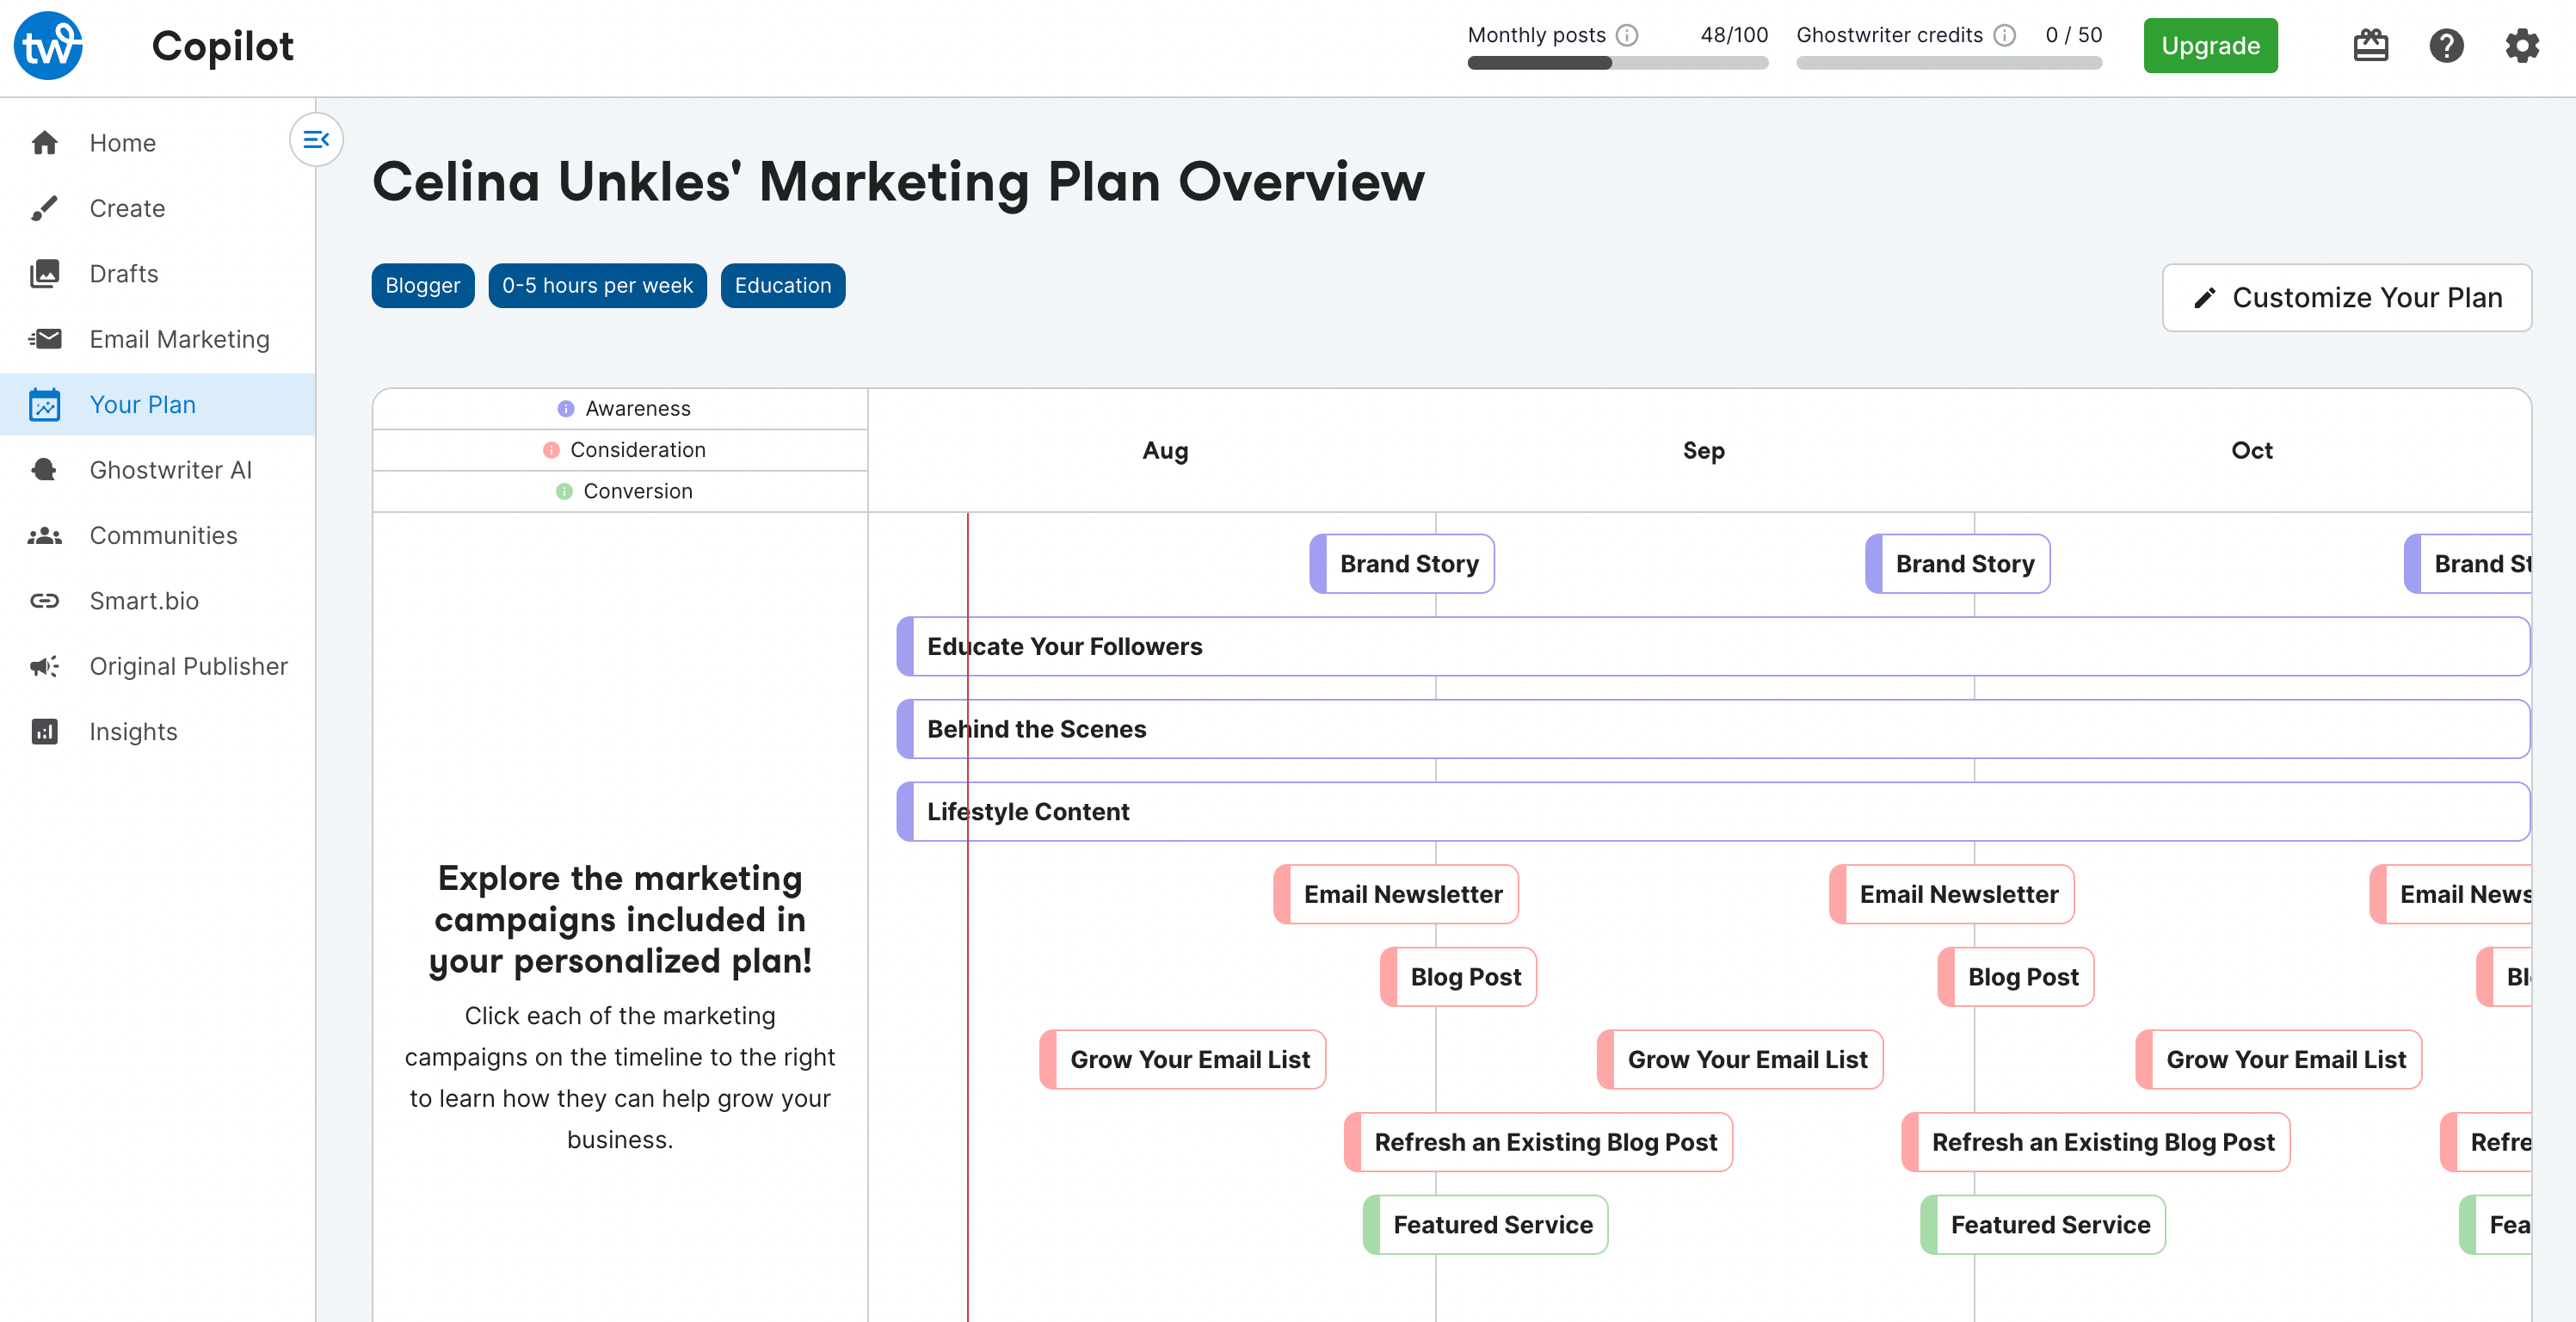 Use Pinterest Marketing Plan overview